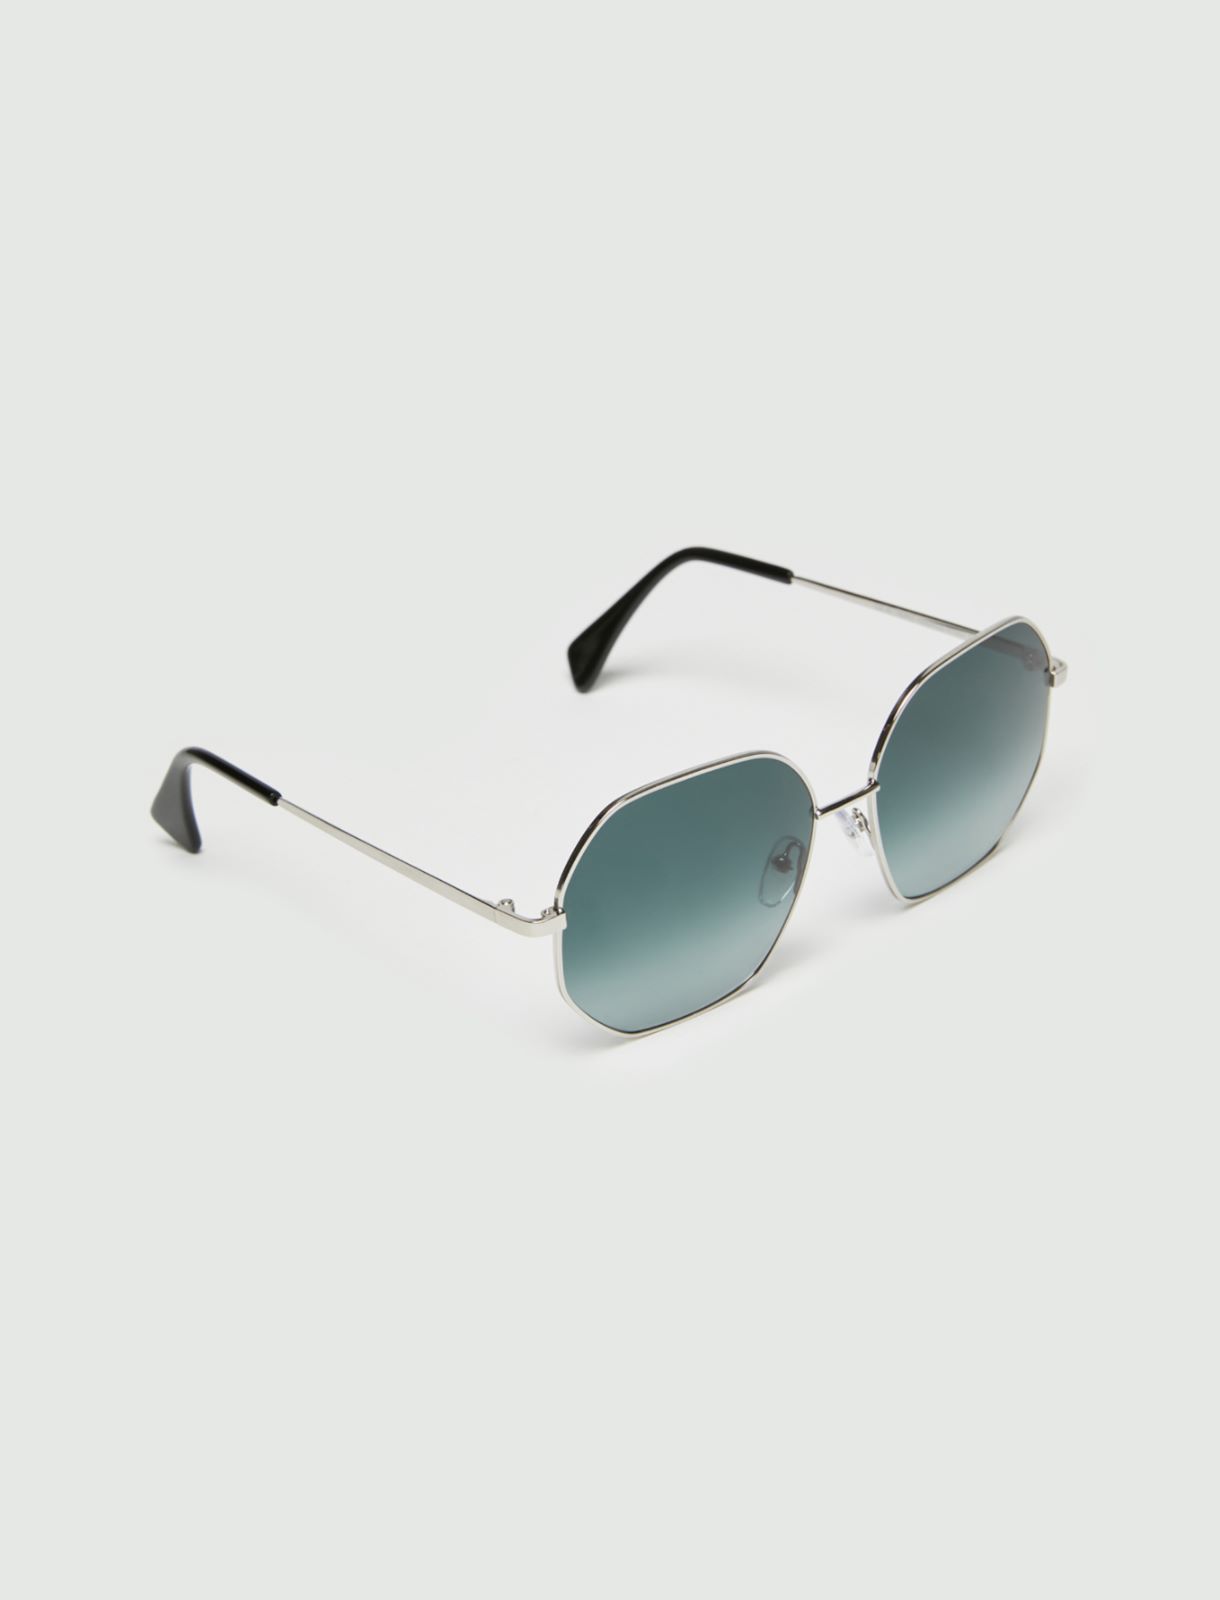 Metal sunglasses - Nickel - Marella - 2